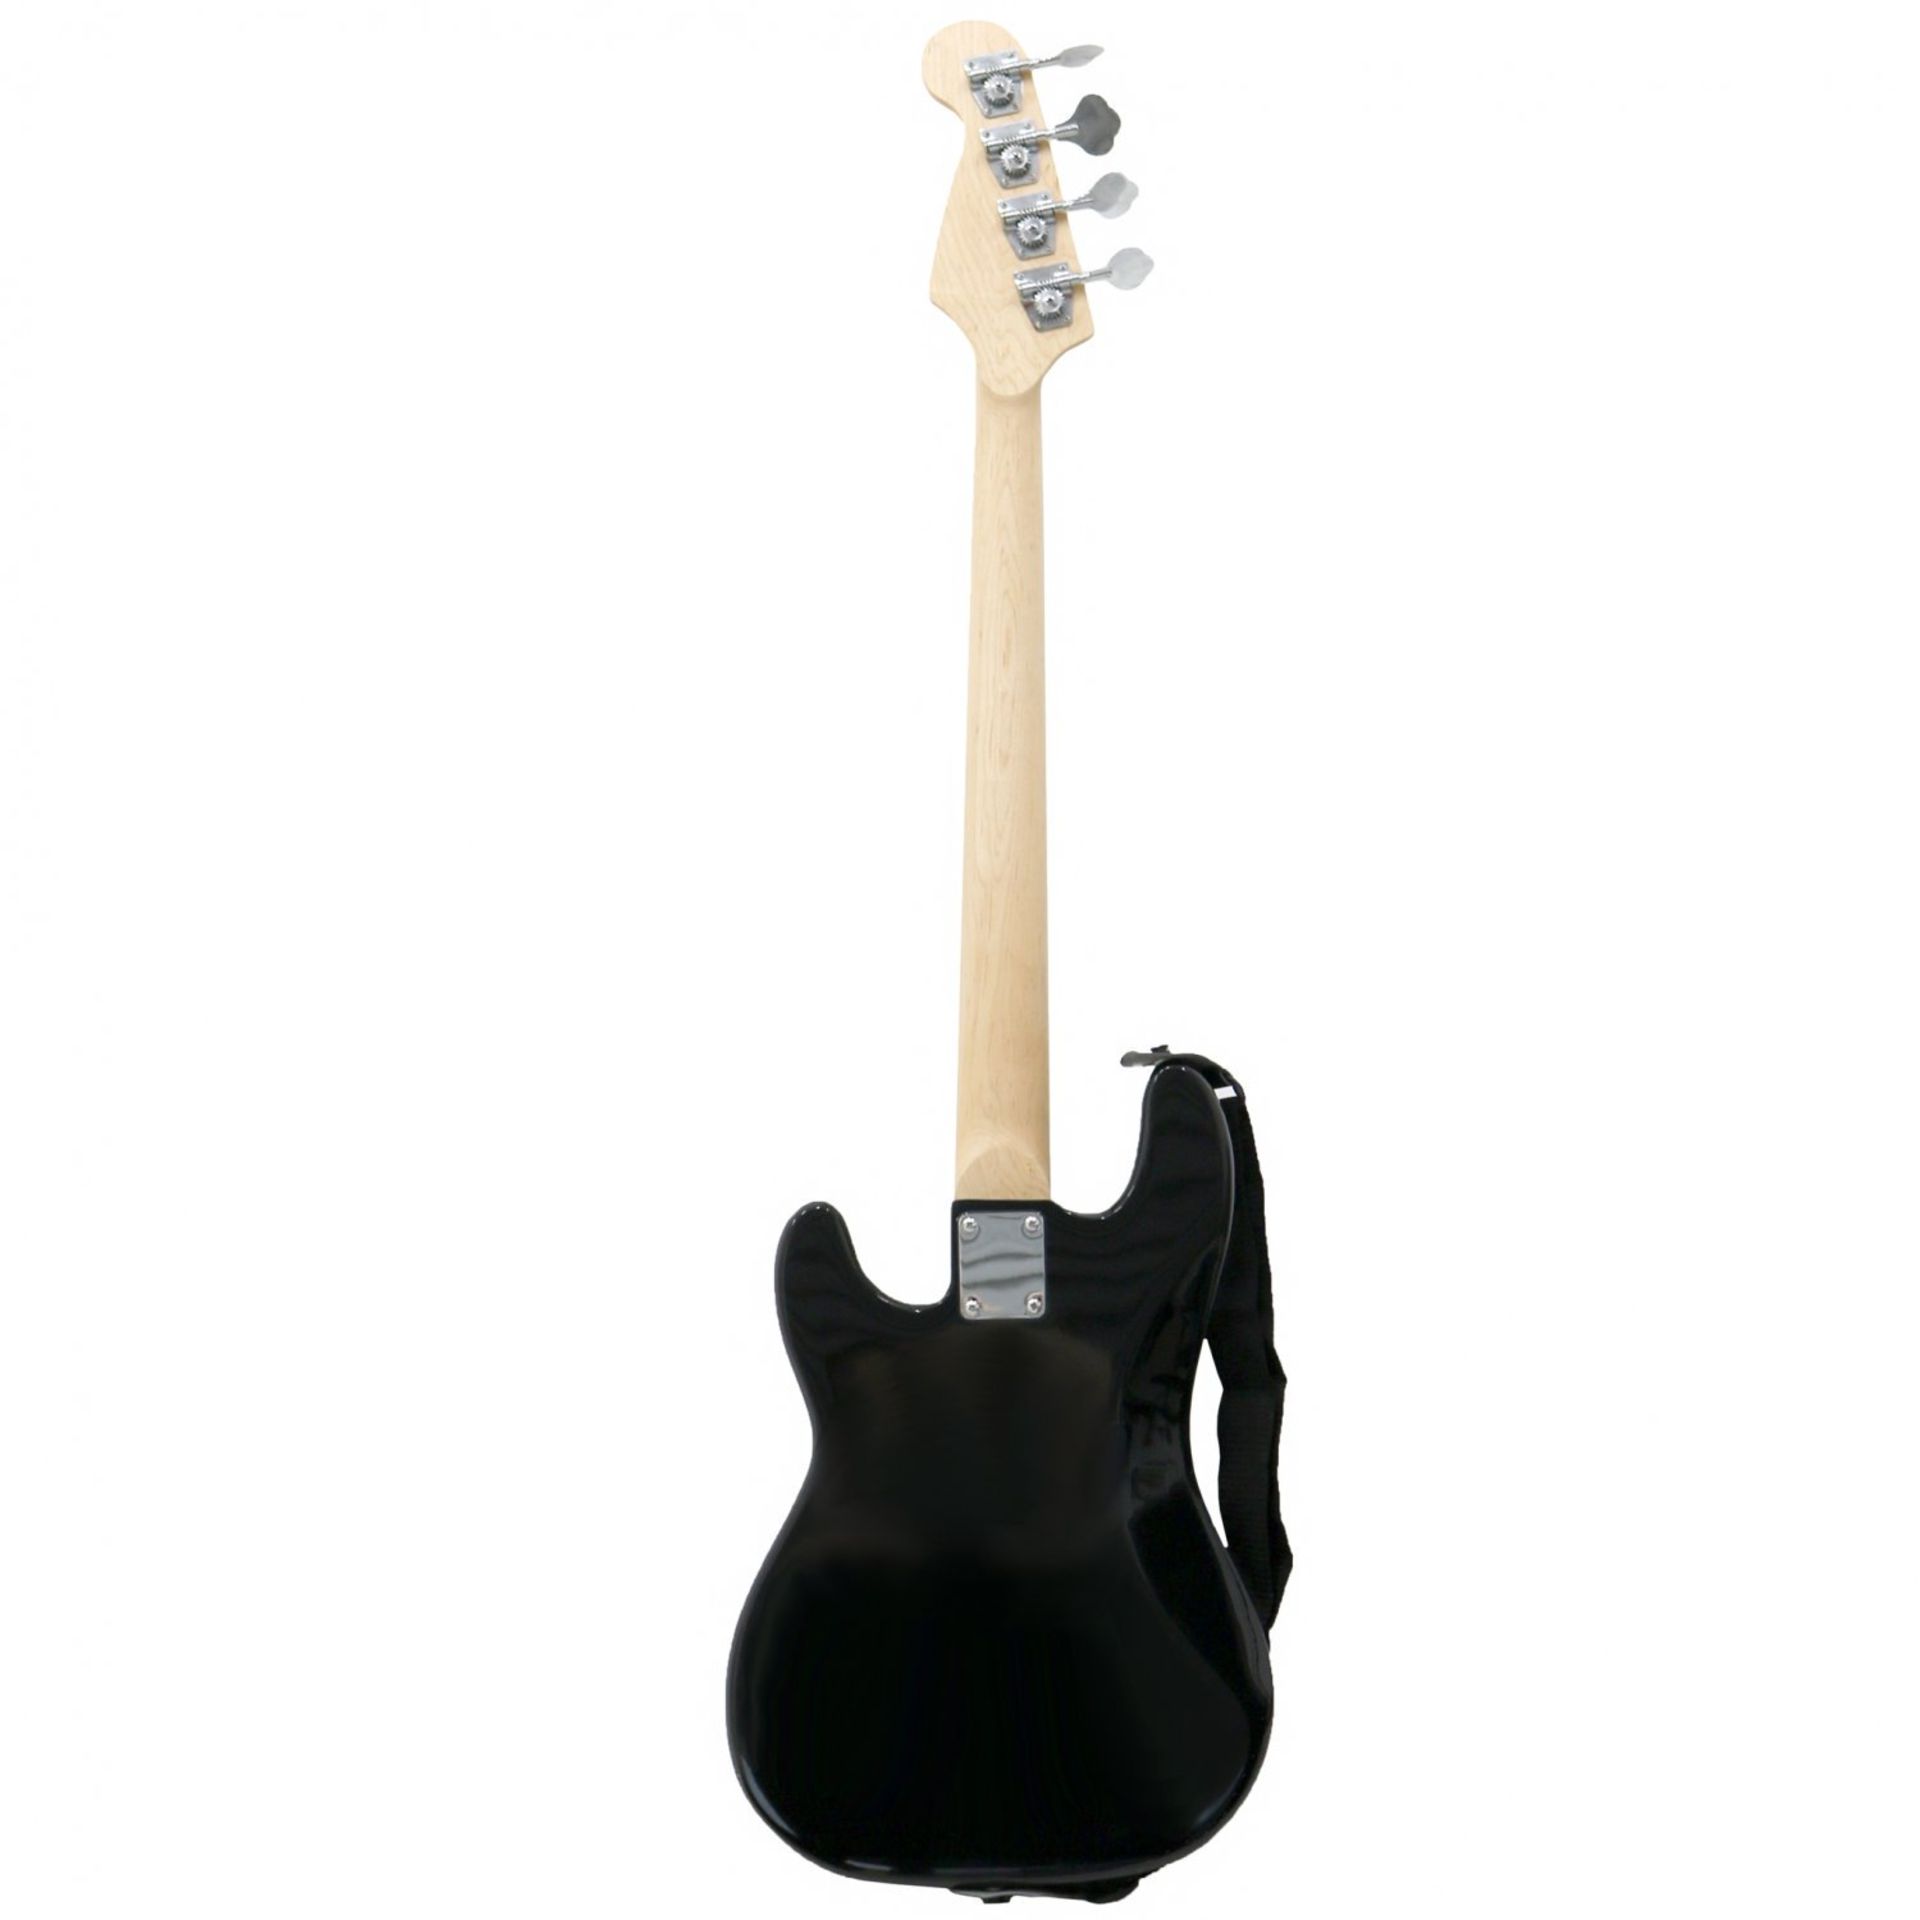 (KK103) PB Precision Style Black 4 String Electric Bass Guitar & 15W Amp The PB is a pr... - Bild 2 aus 2